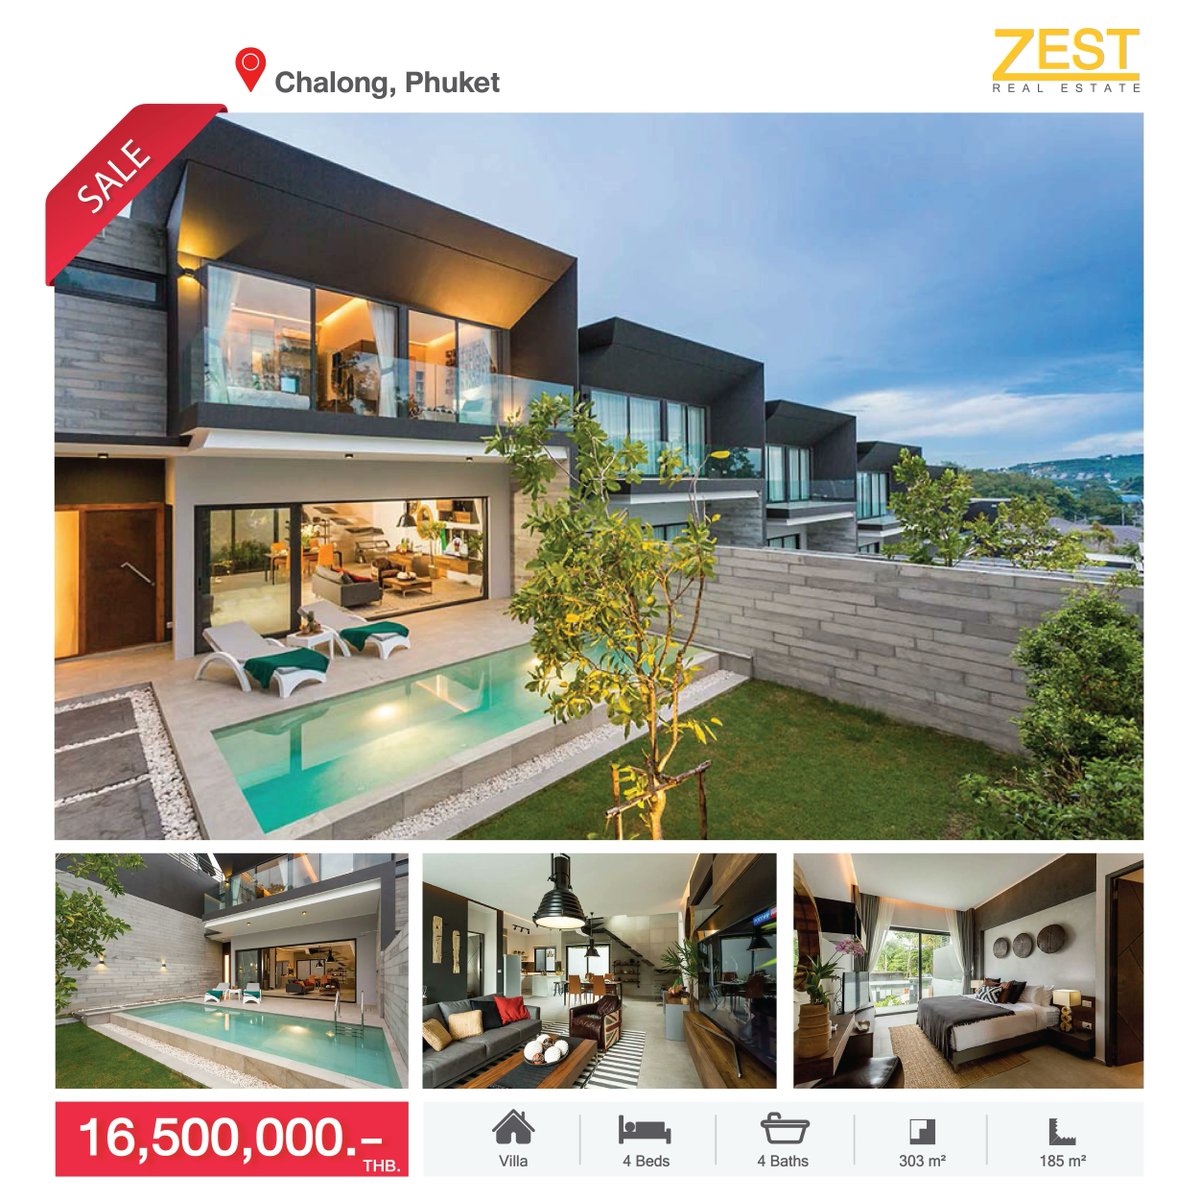 Villa for sale in Chalong, Phuket
4 Beds/ 4 Baths/ 303 sqm.

16,500,000 THB.
buff.ly/44U3BoP 

#zestrealestate #zestphuket  #luxuryvillas  #PhuketVillas #villainphuket #villaforsale #PropertylnPhuket